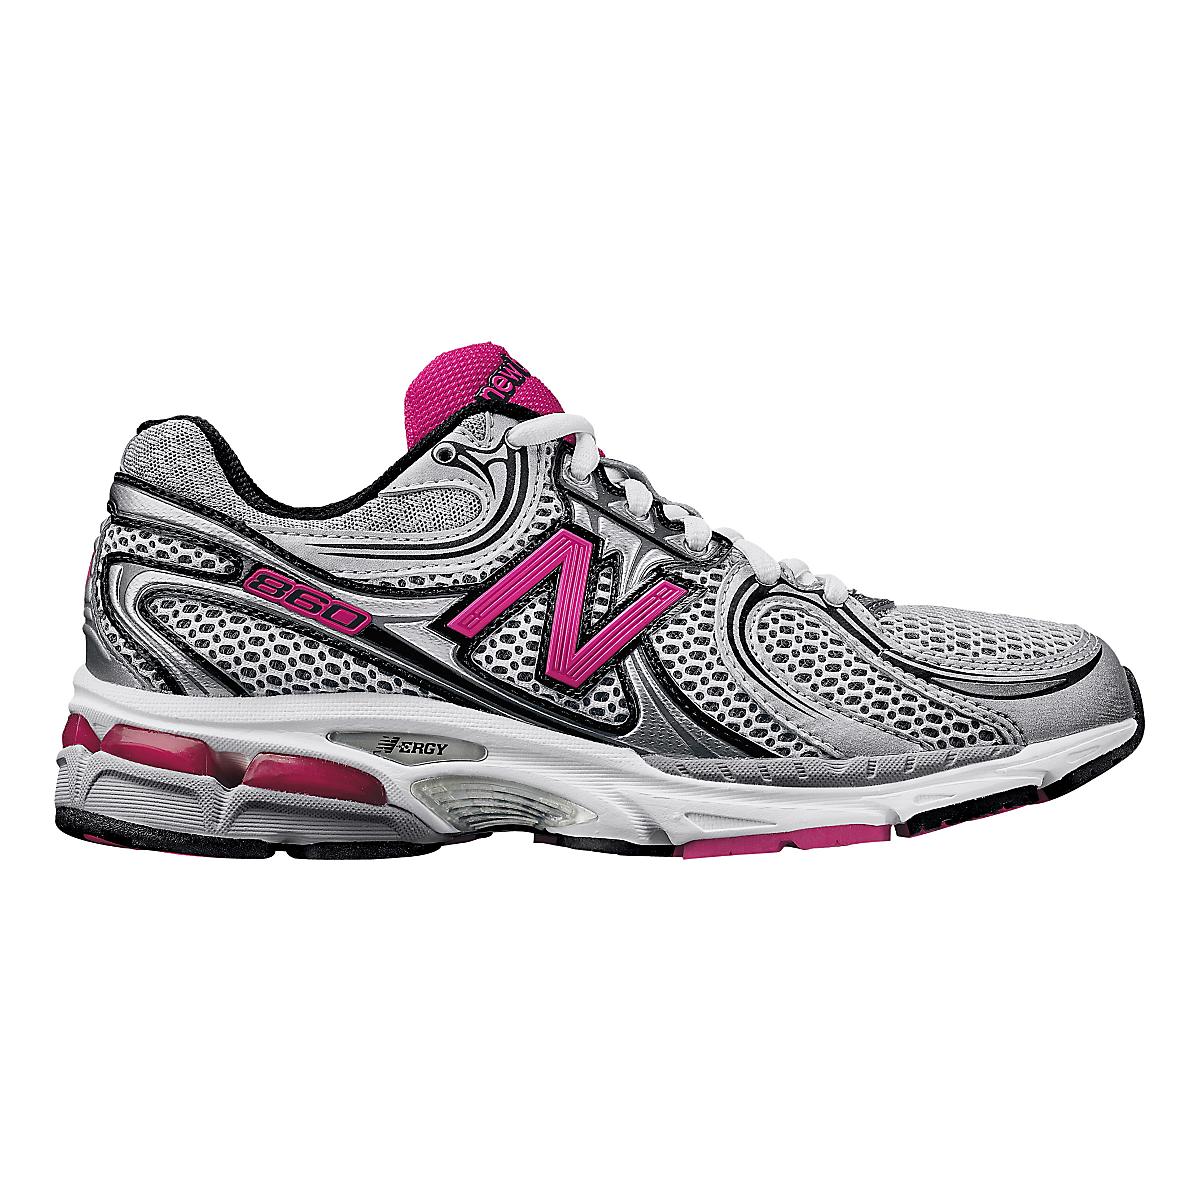 Womens New Balance 860 Running Shoe at Road Runner Sports